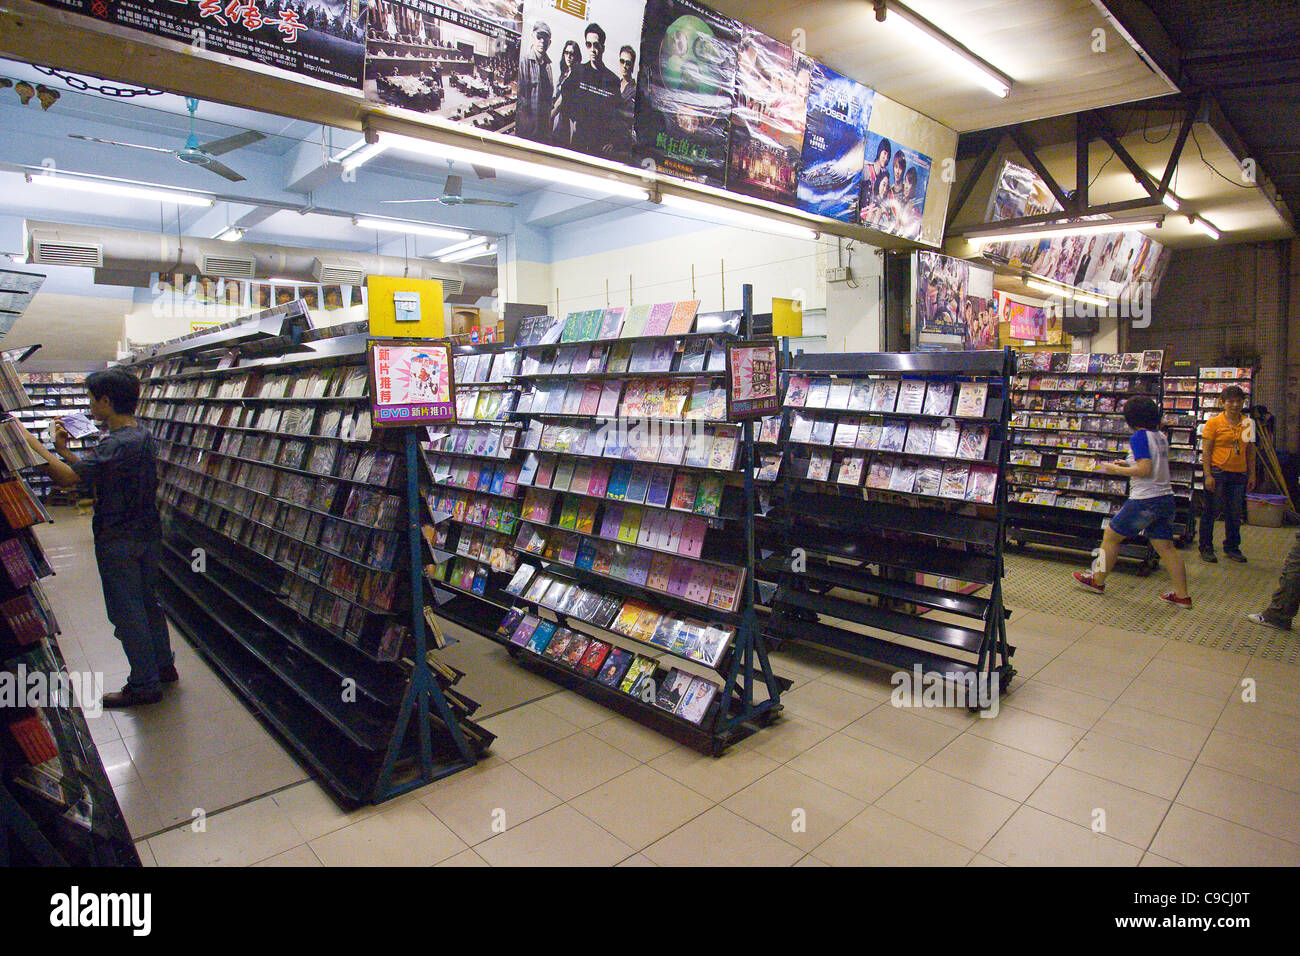 SHA WAN VILLAGE, PAN YU, GUANGDONG PROVINCE, CHINA - Store selling CD and  DVD music and movies Stock Photo - Alamy